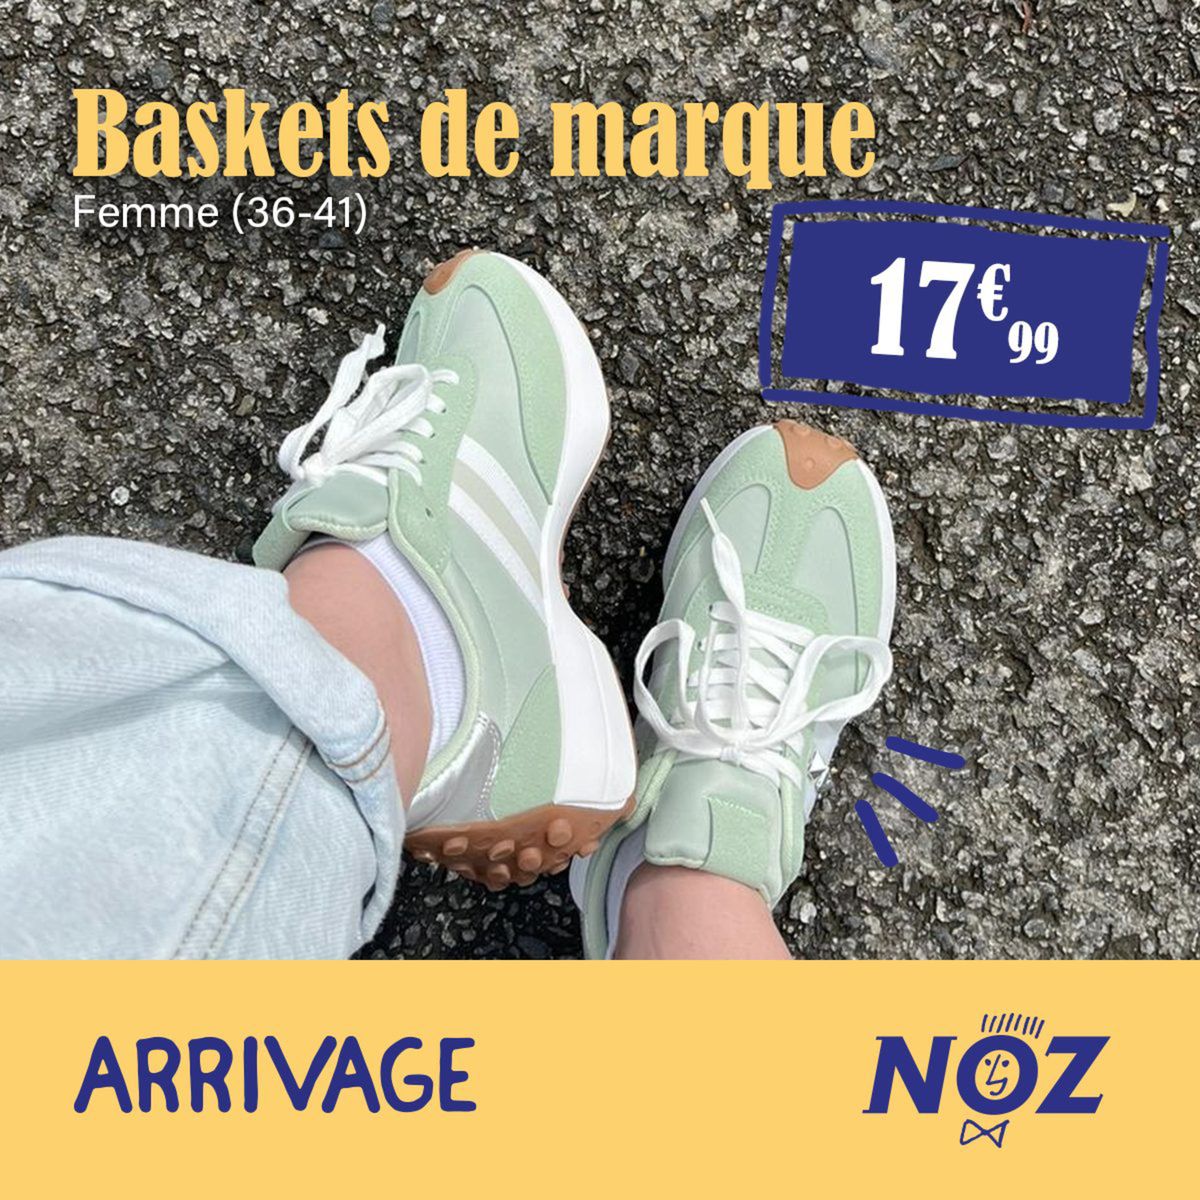 Catalogue Baskets femme & homme, page 00001